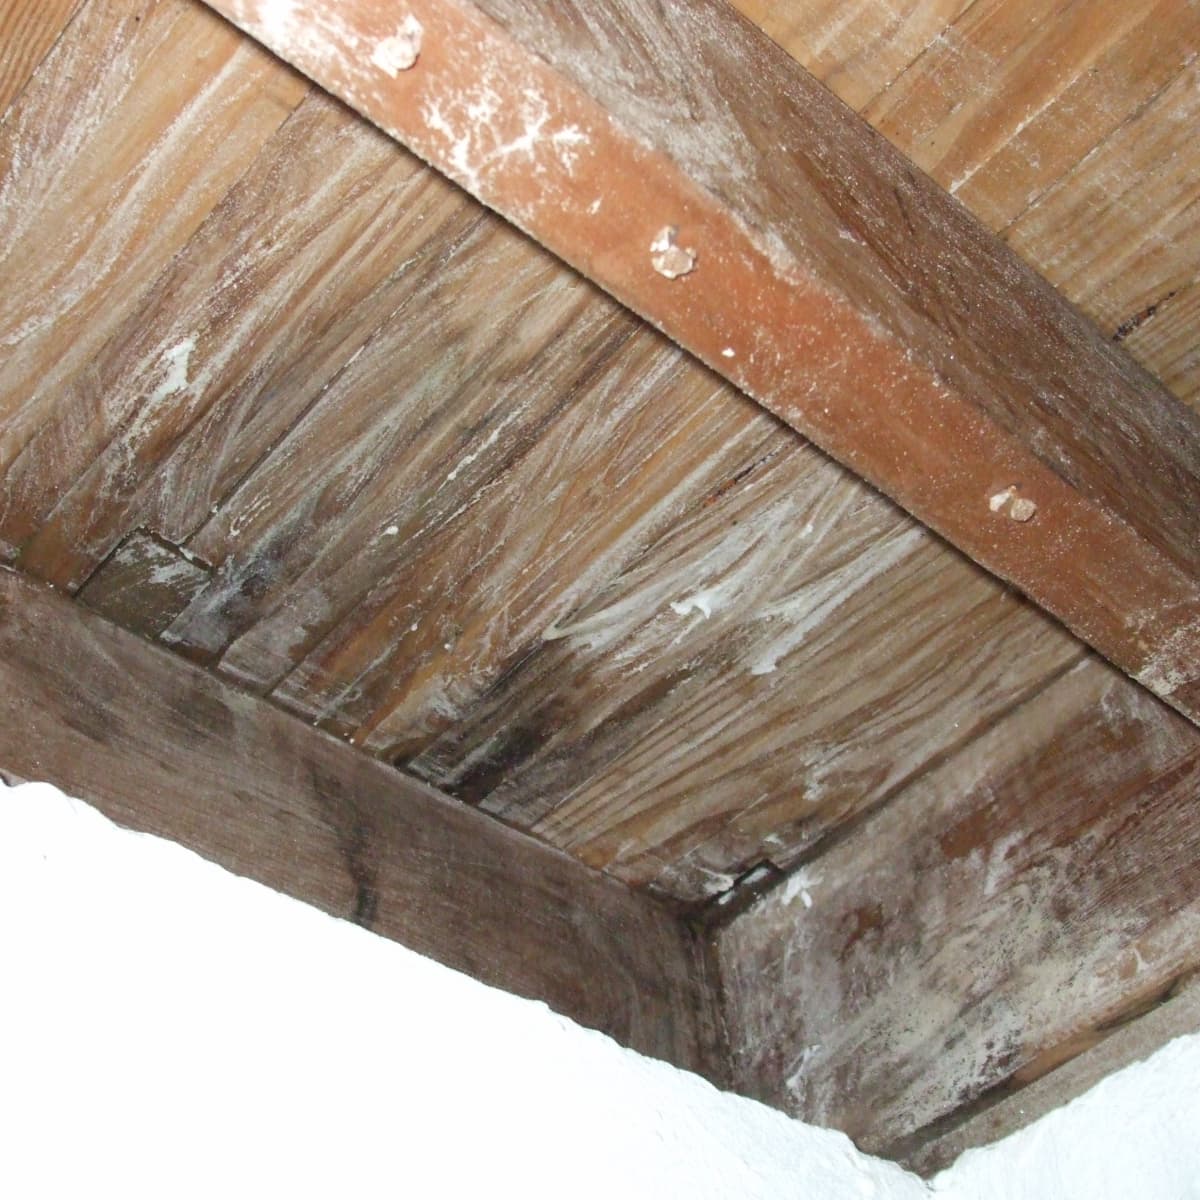 Mold Infestation On Wood With Borax, Mold On Hardwood Floor